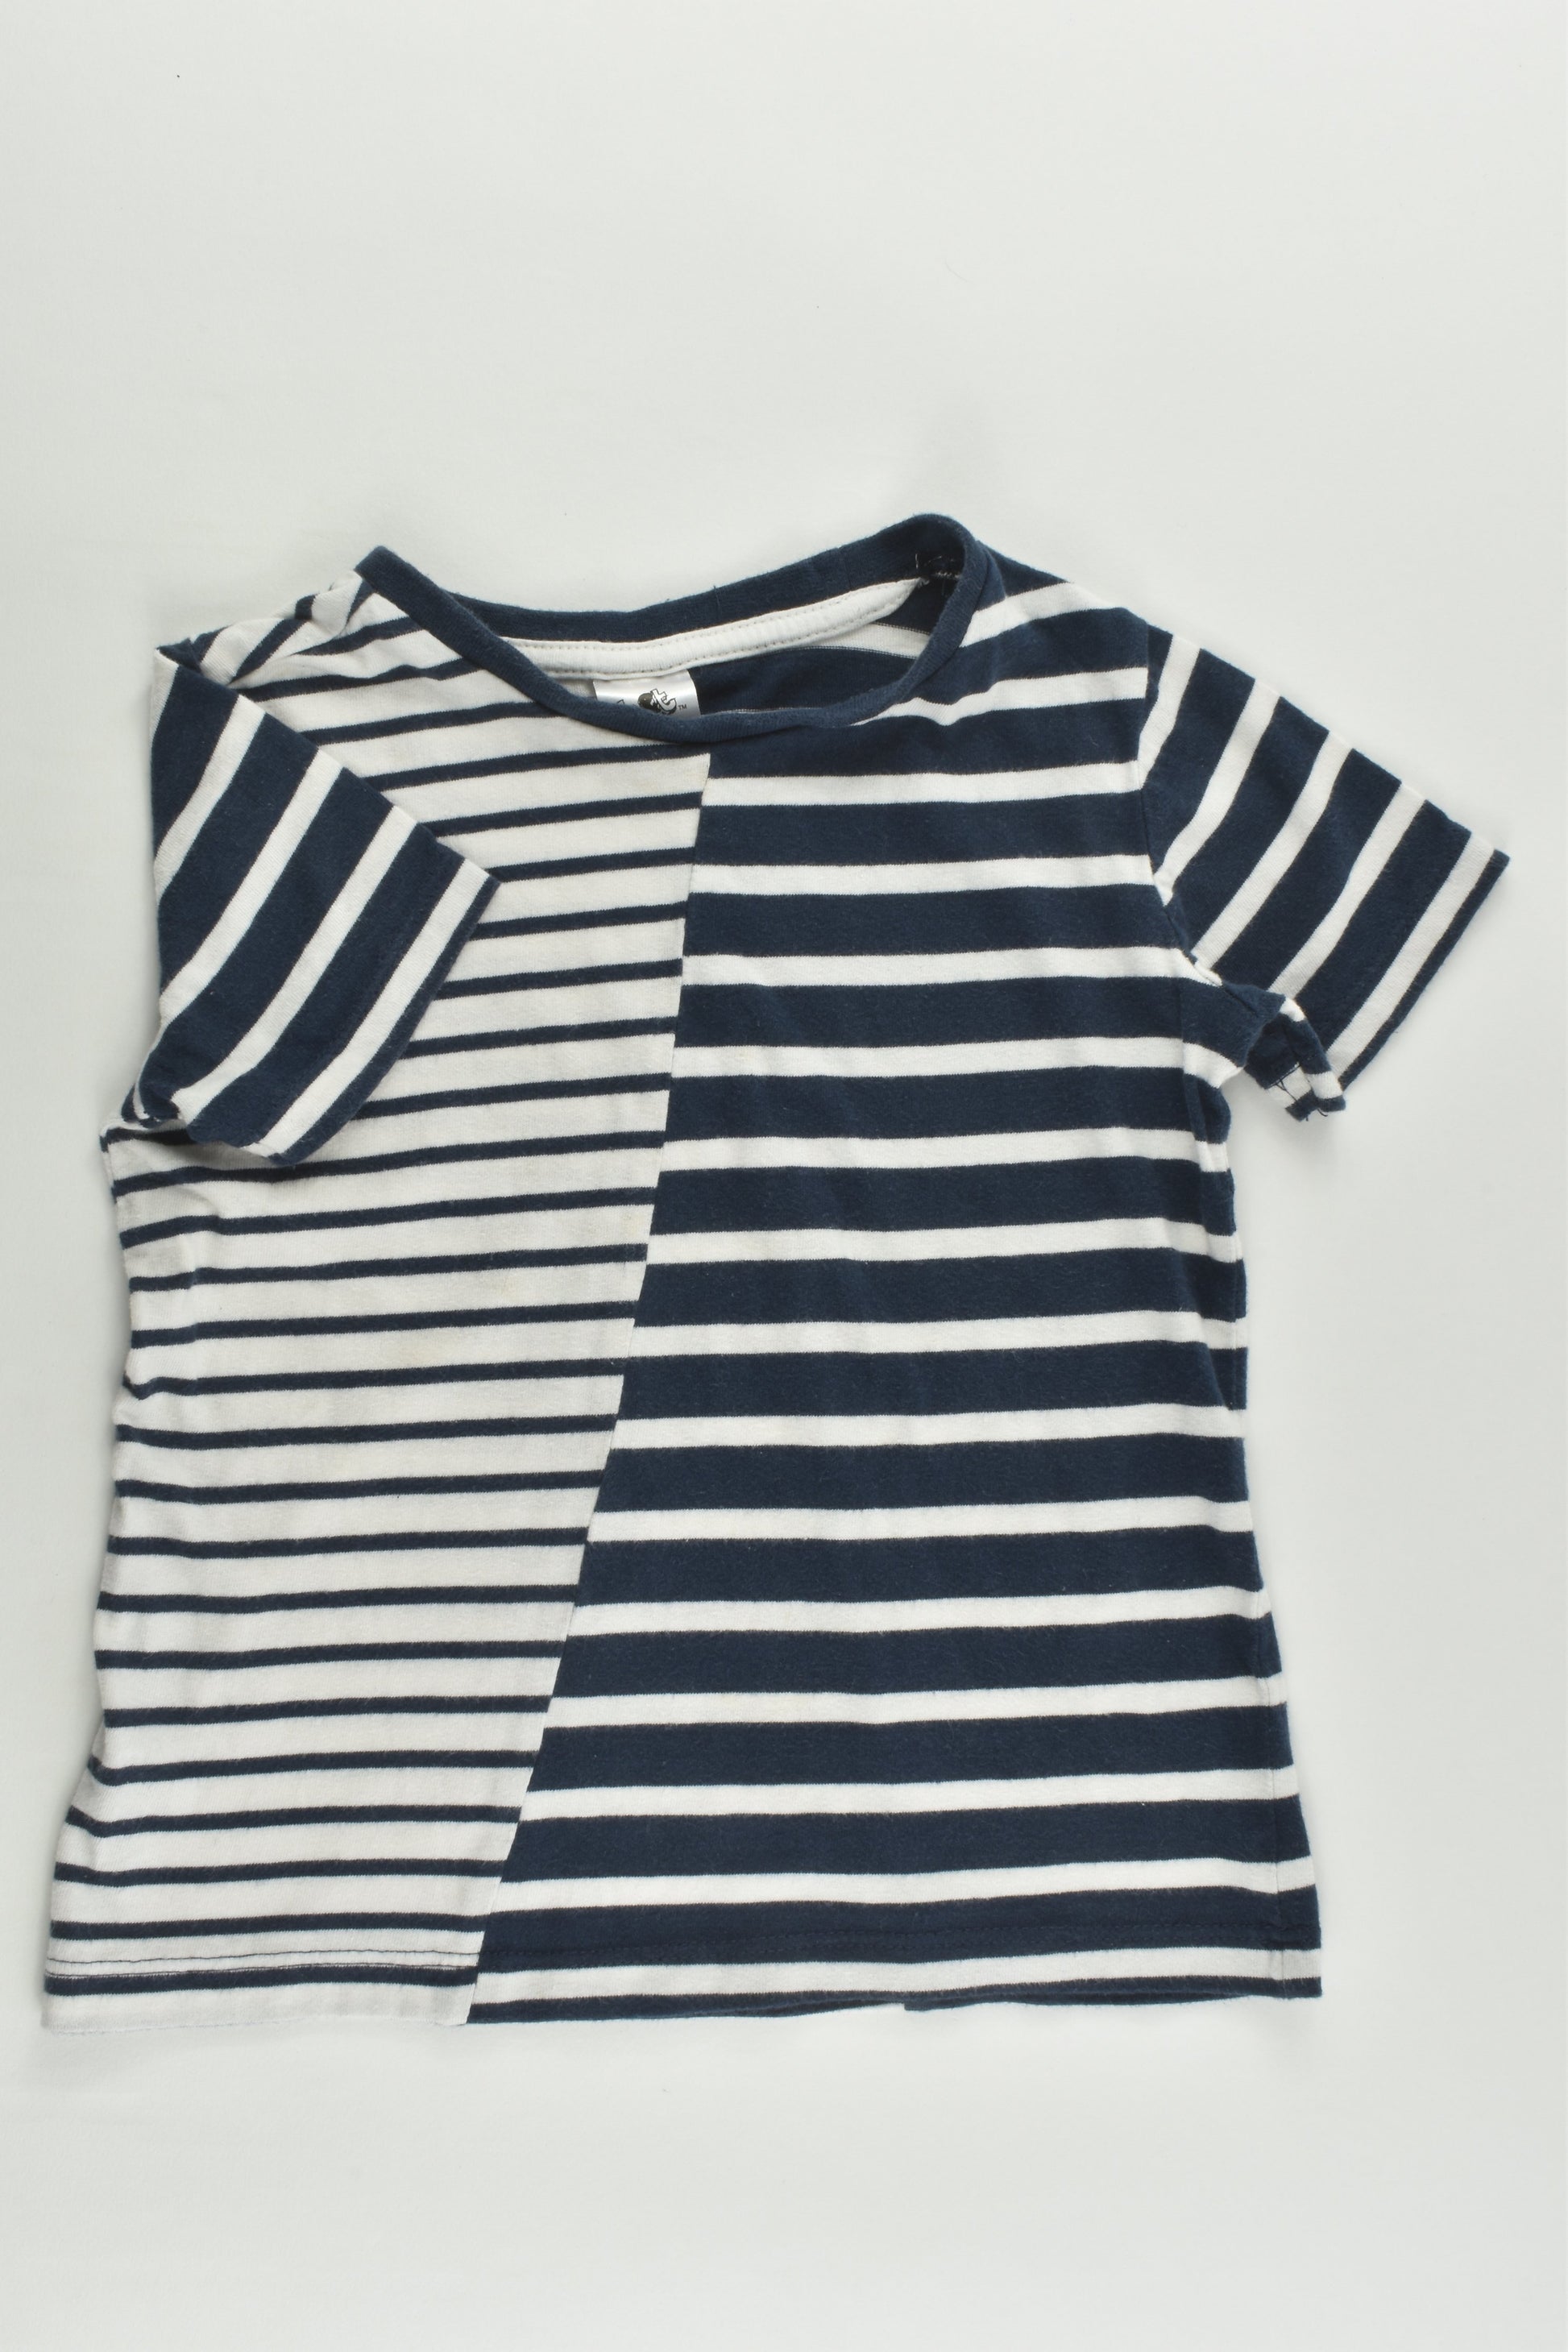 H&T Size 2 Striped T-shirt